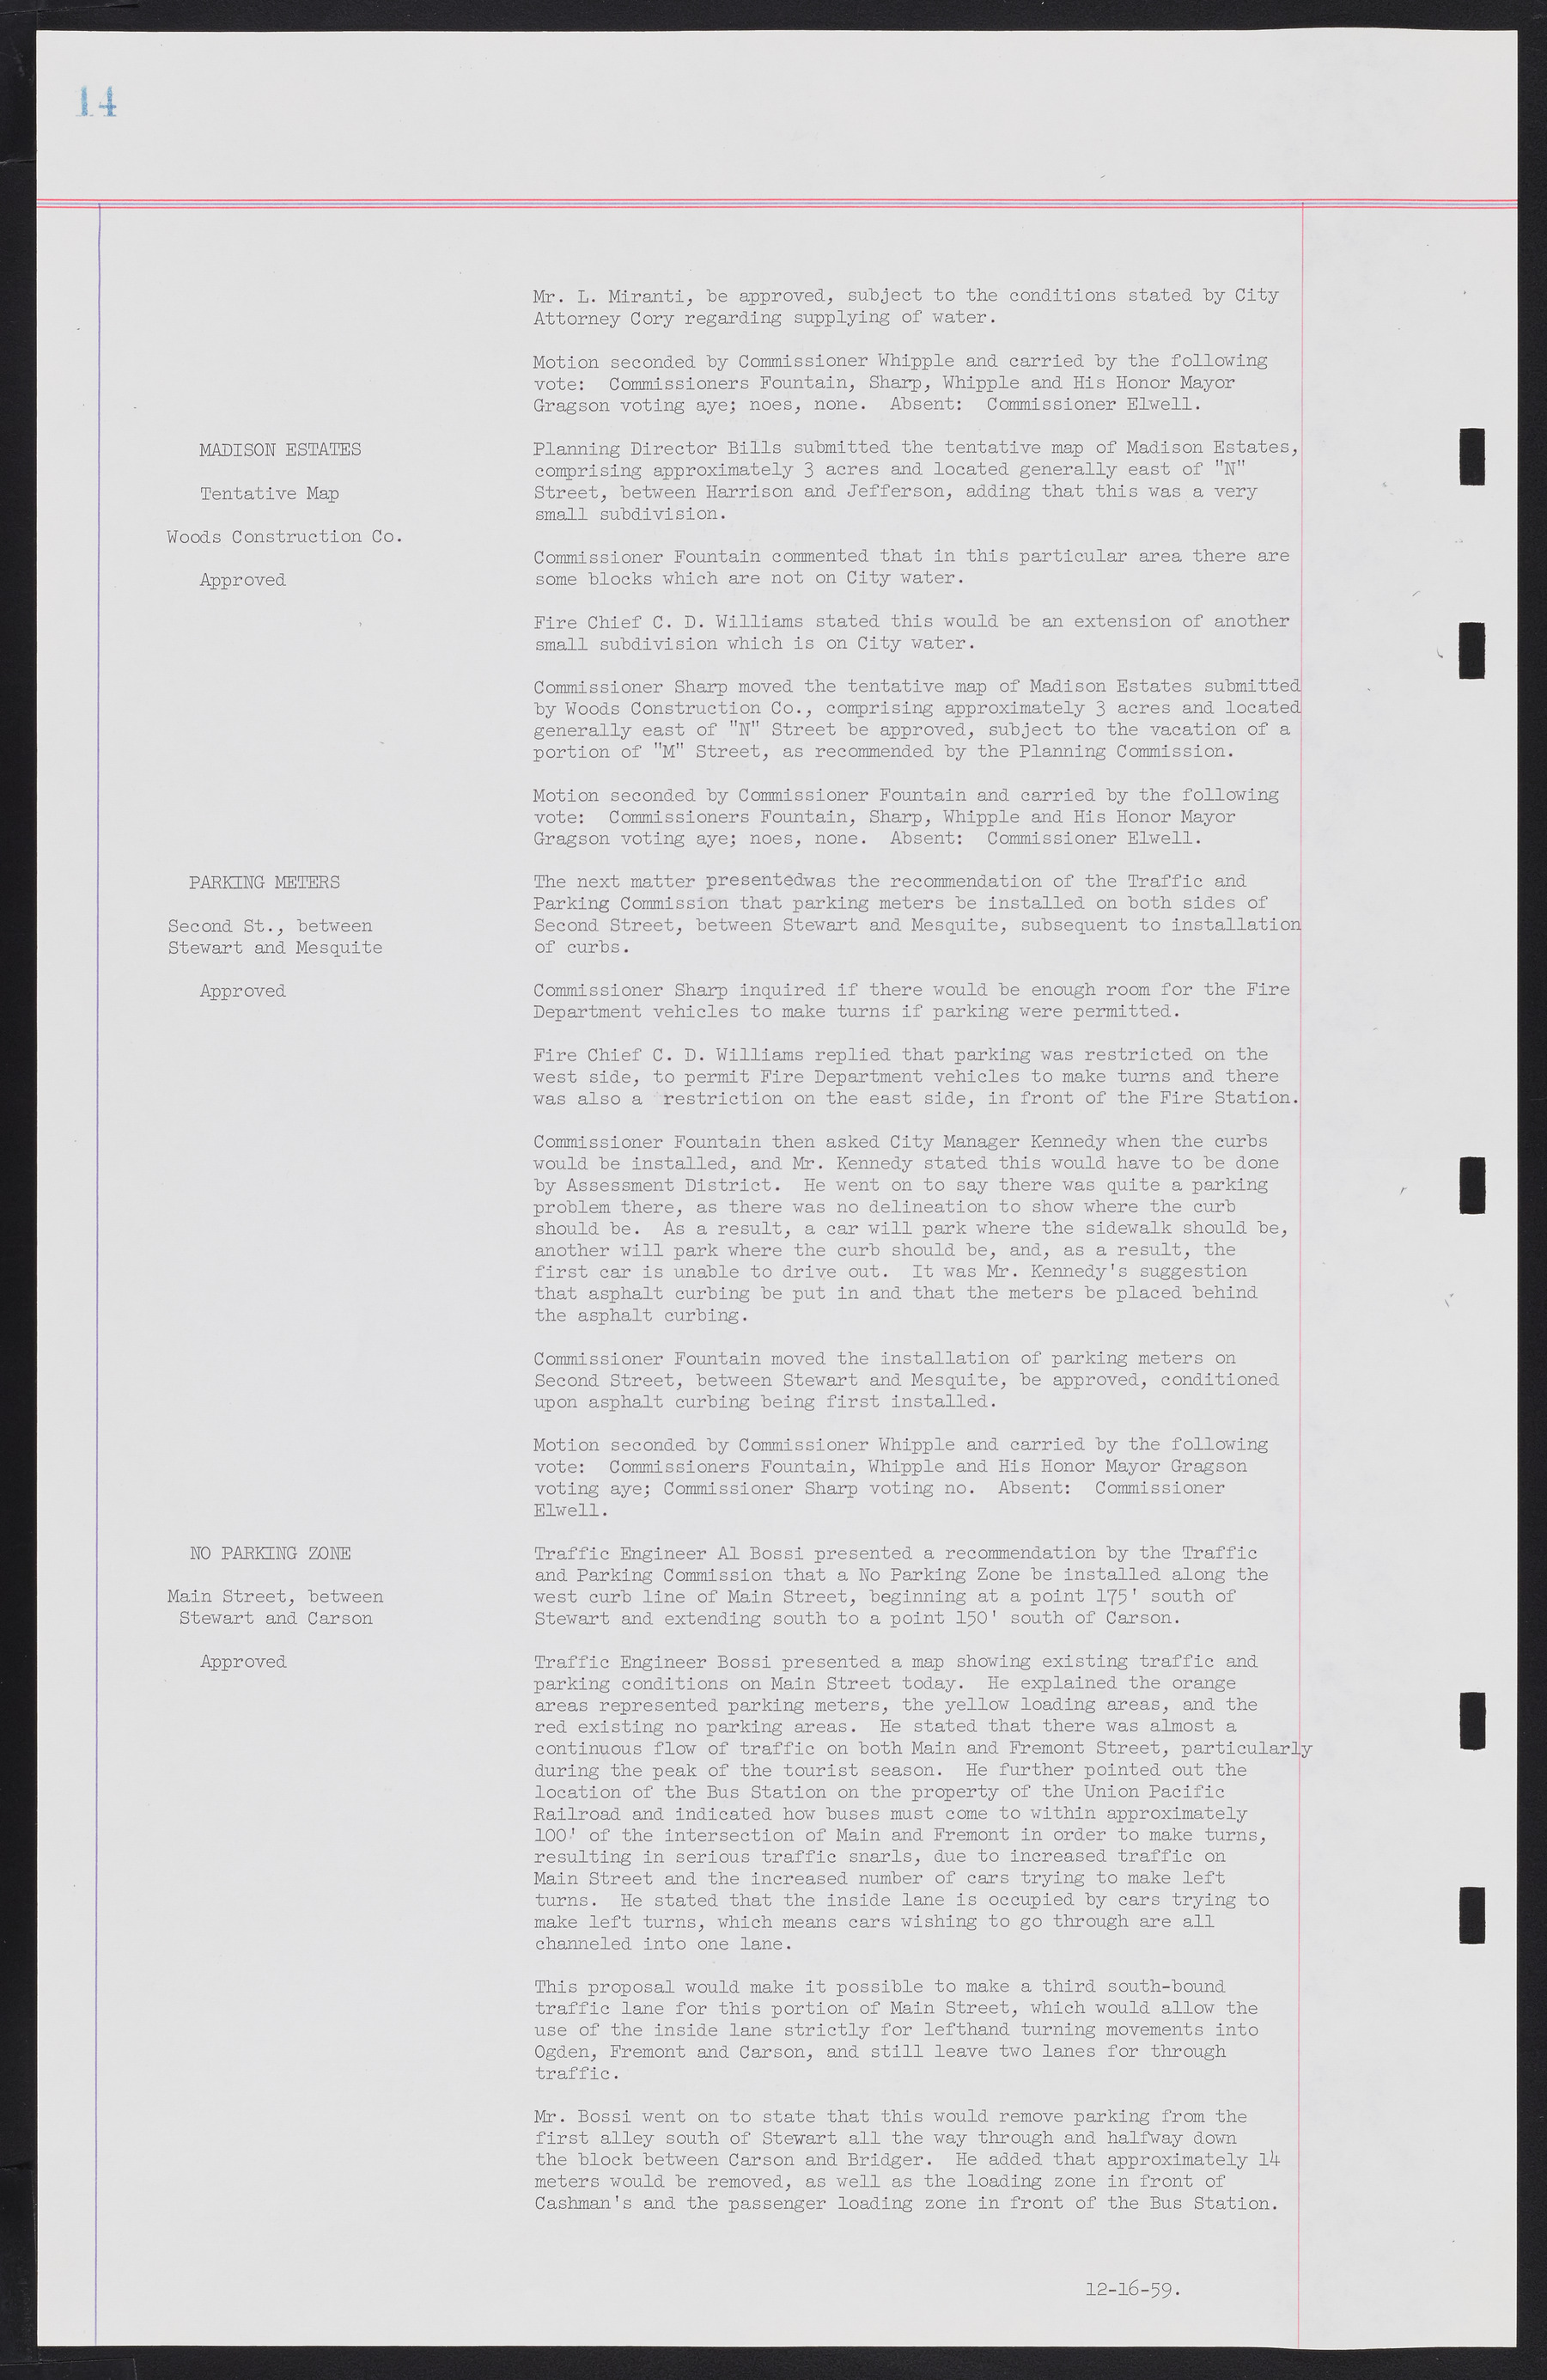 Las Vegas City Commission Minutes, December 8, 1959 to February 17, 1960, lvc000012-18